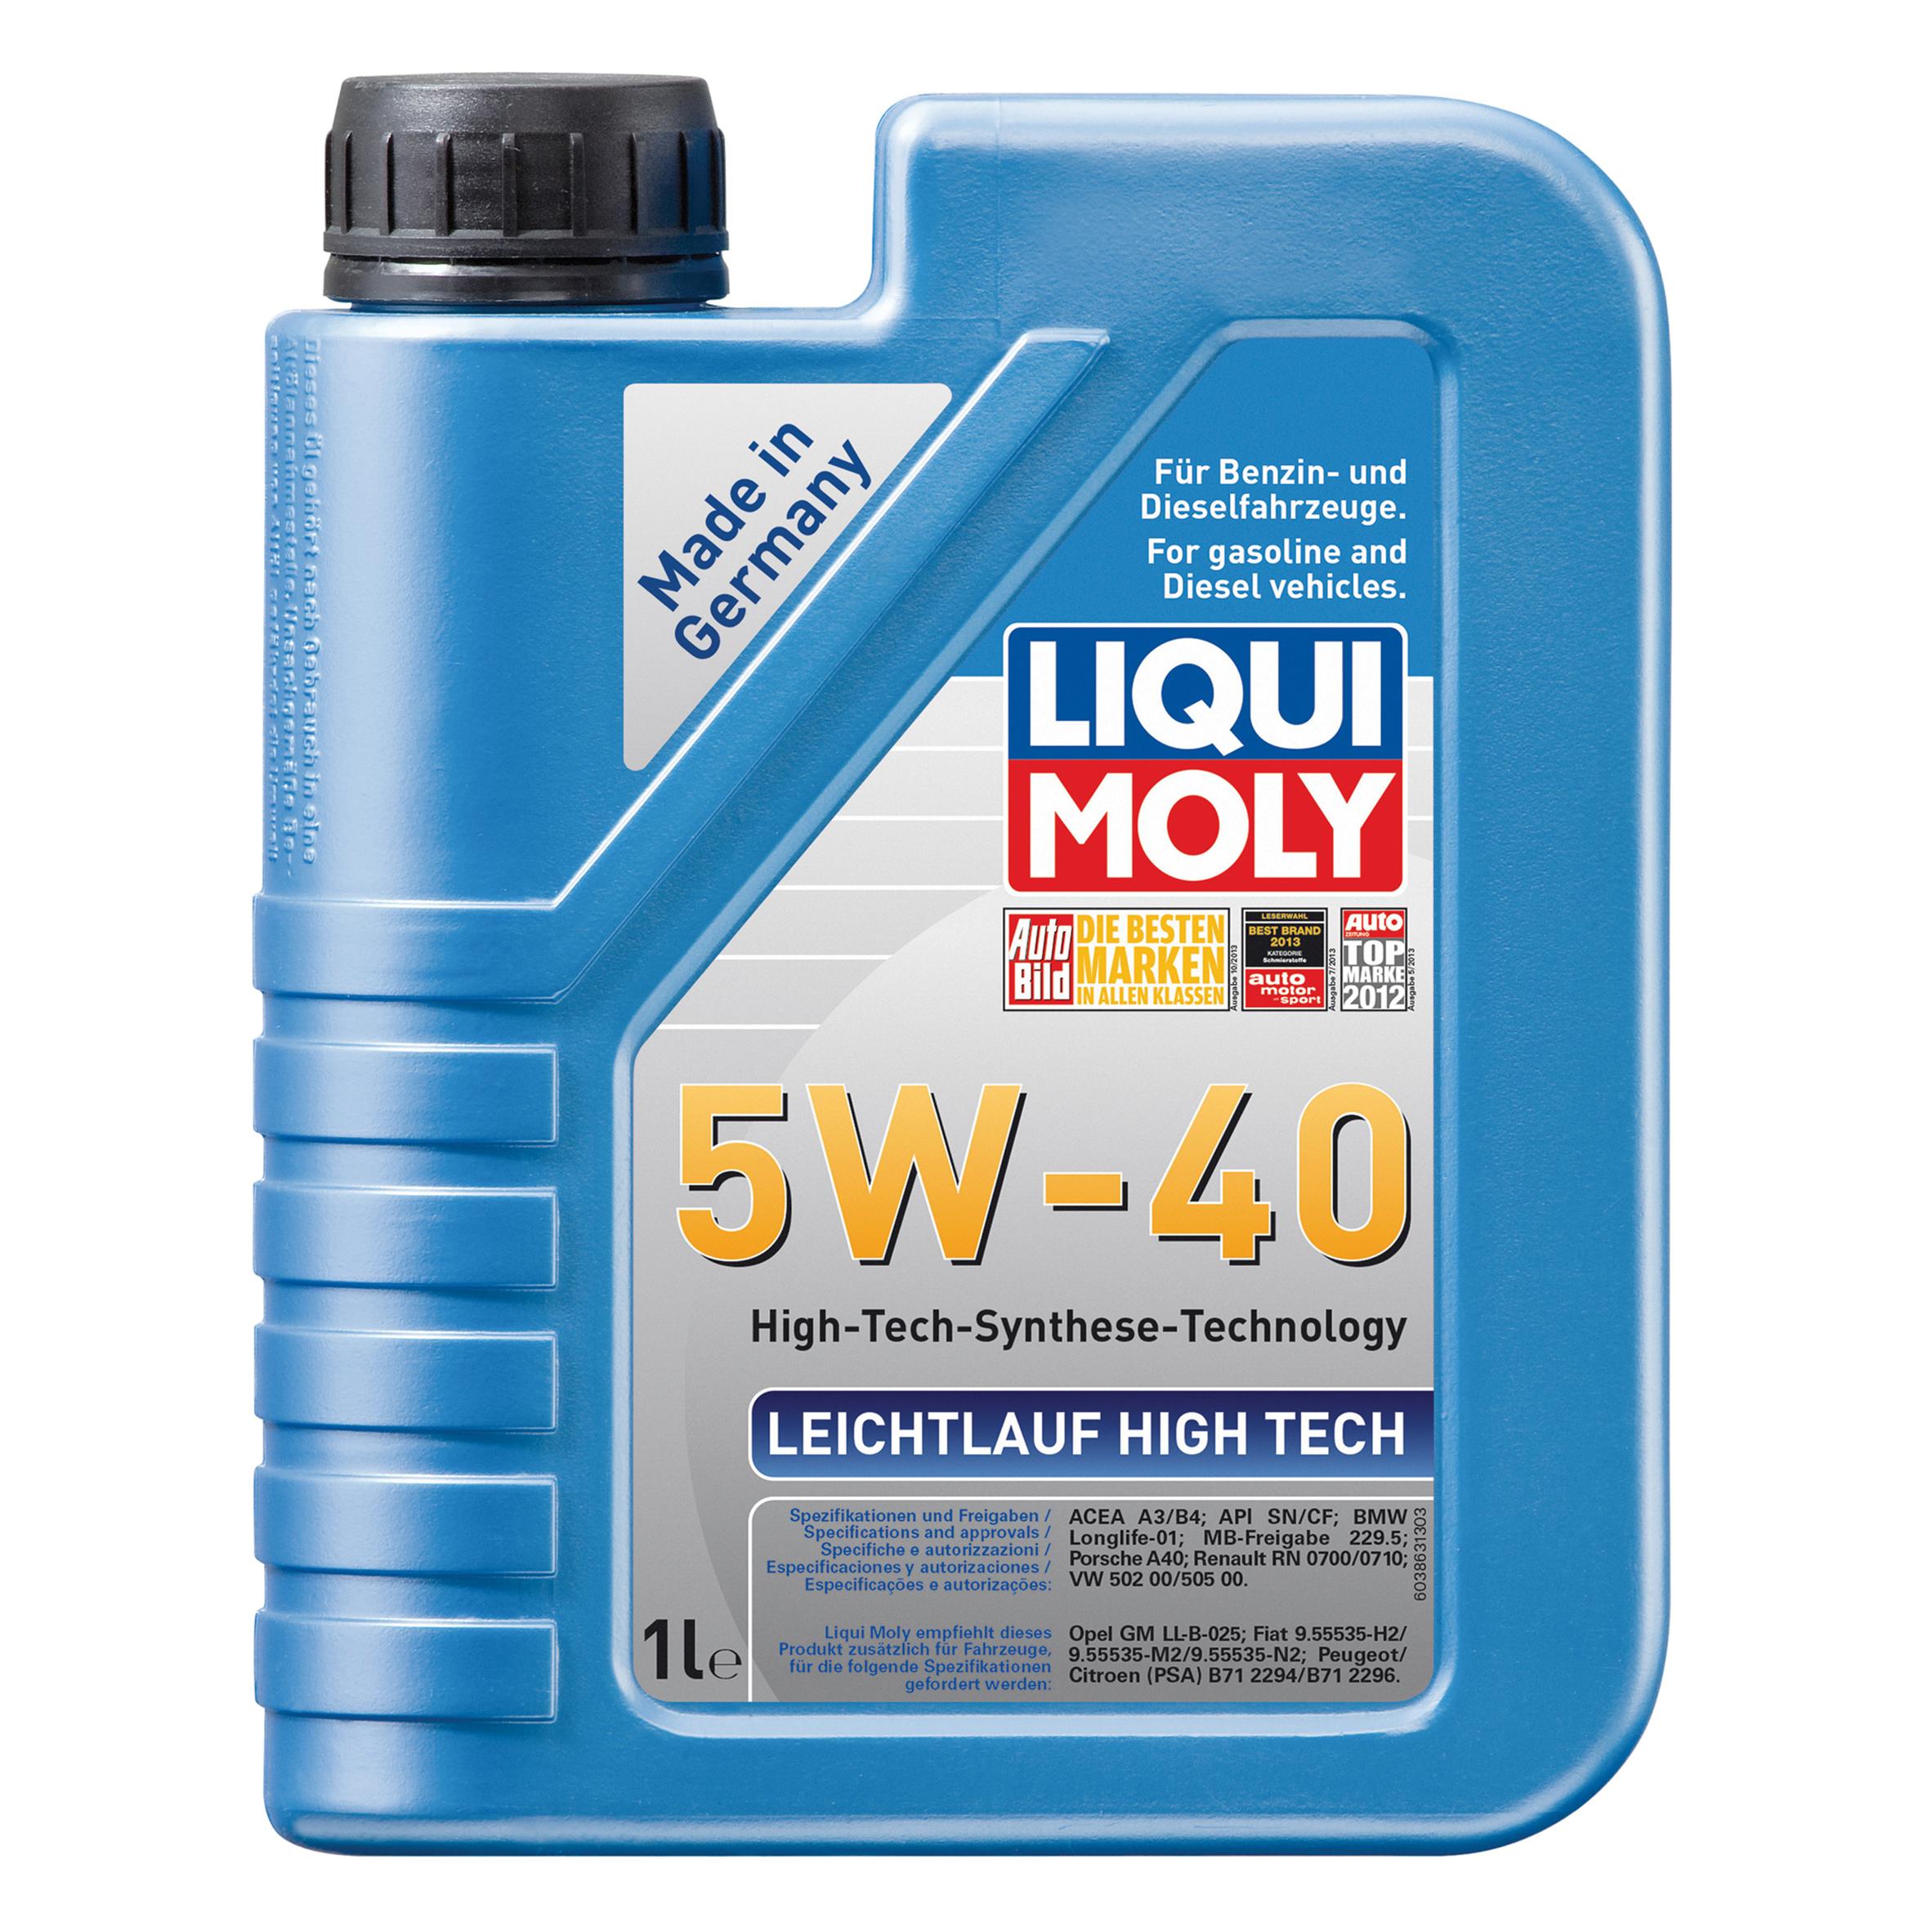 Liqui Moly Leichtlauf High Tech SAE 5W-40